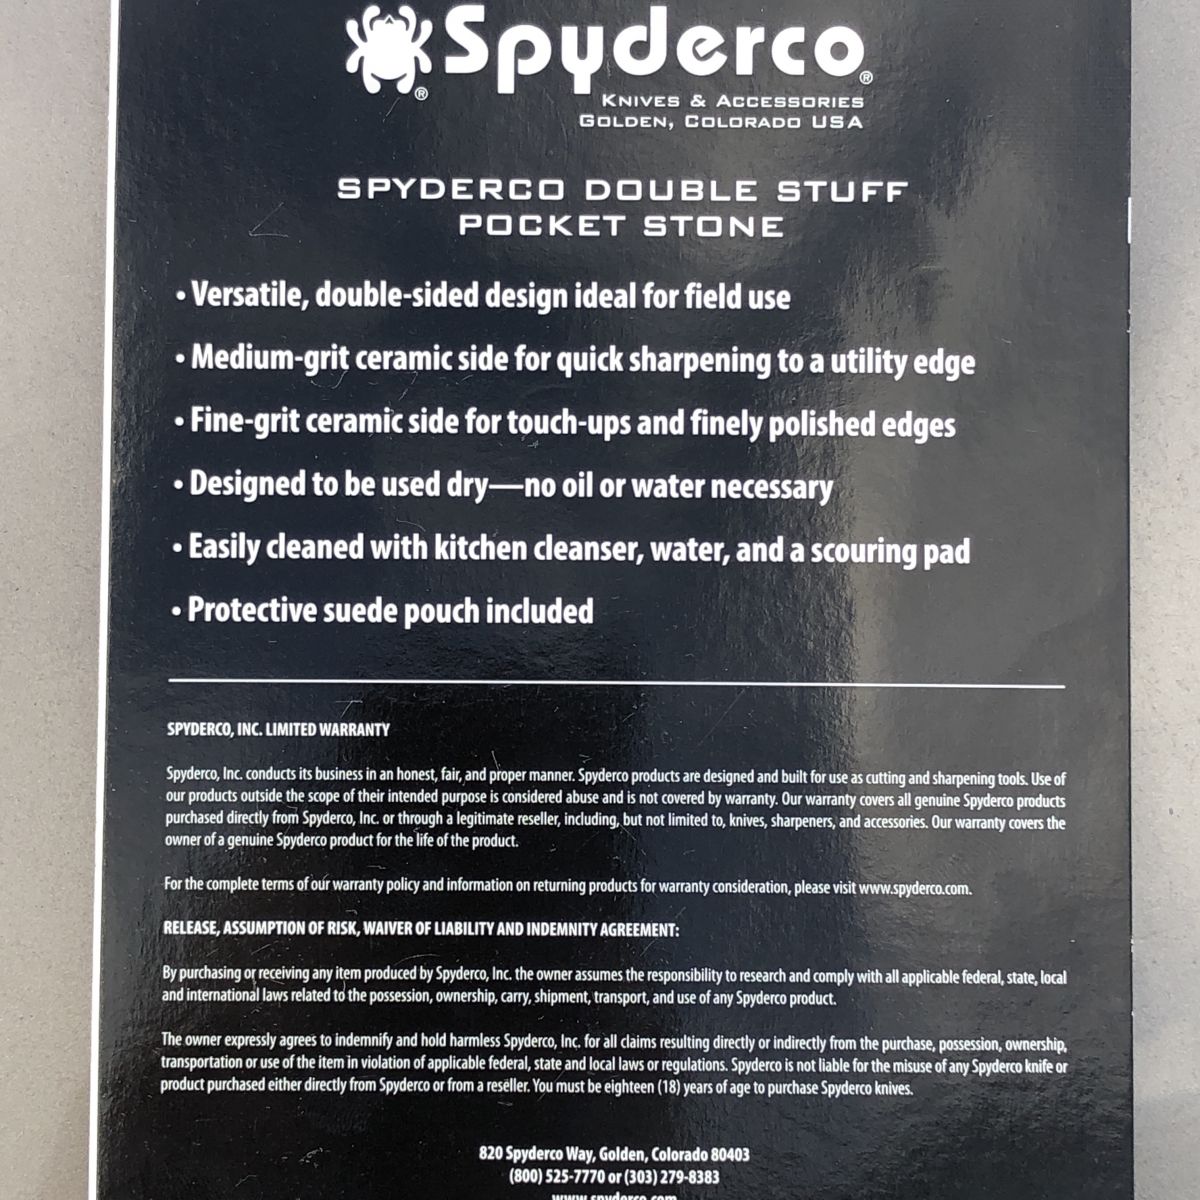 Spyderco DoubleStuff Pocket Stone Knife Sharpening System